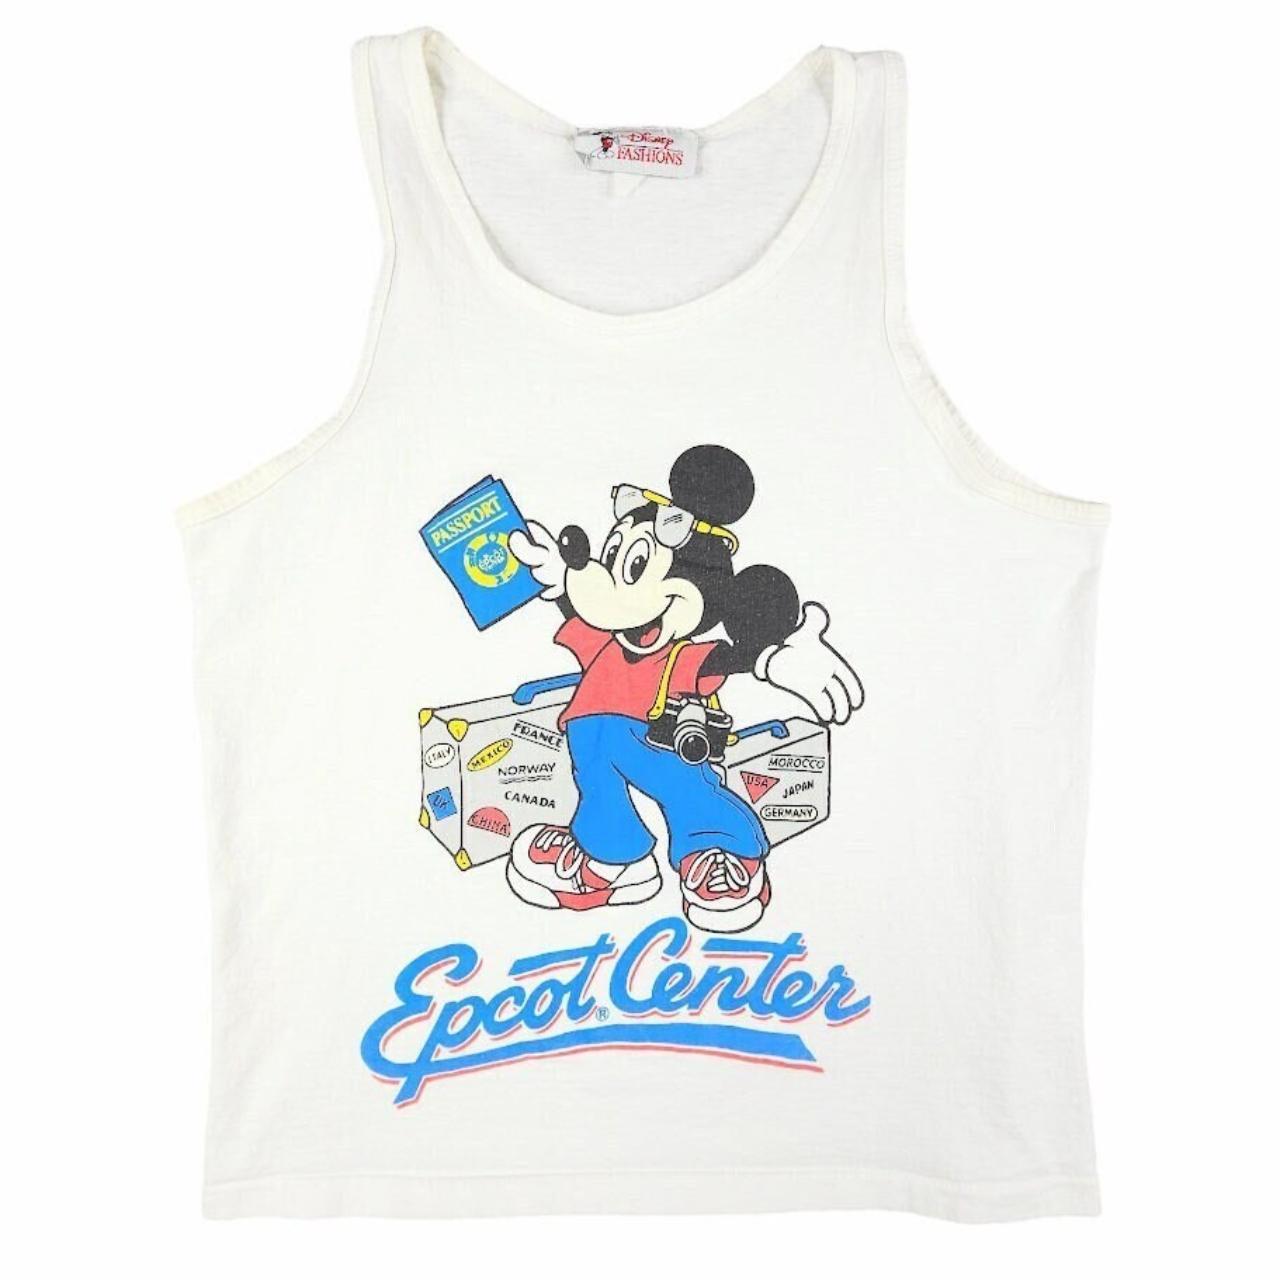 Vintage Mickey Mouse Tank Top Shirt Adult Medium White Disney Cartoon USA  80s